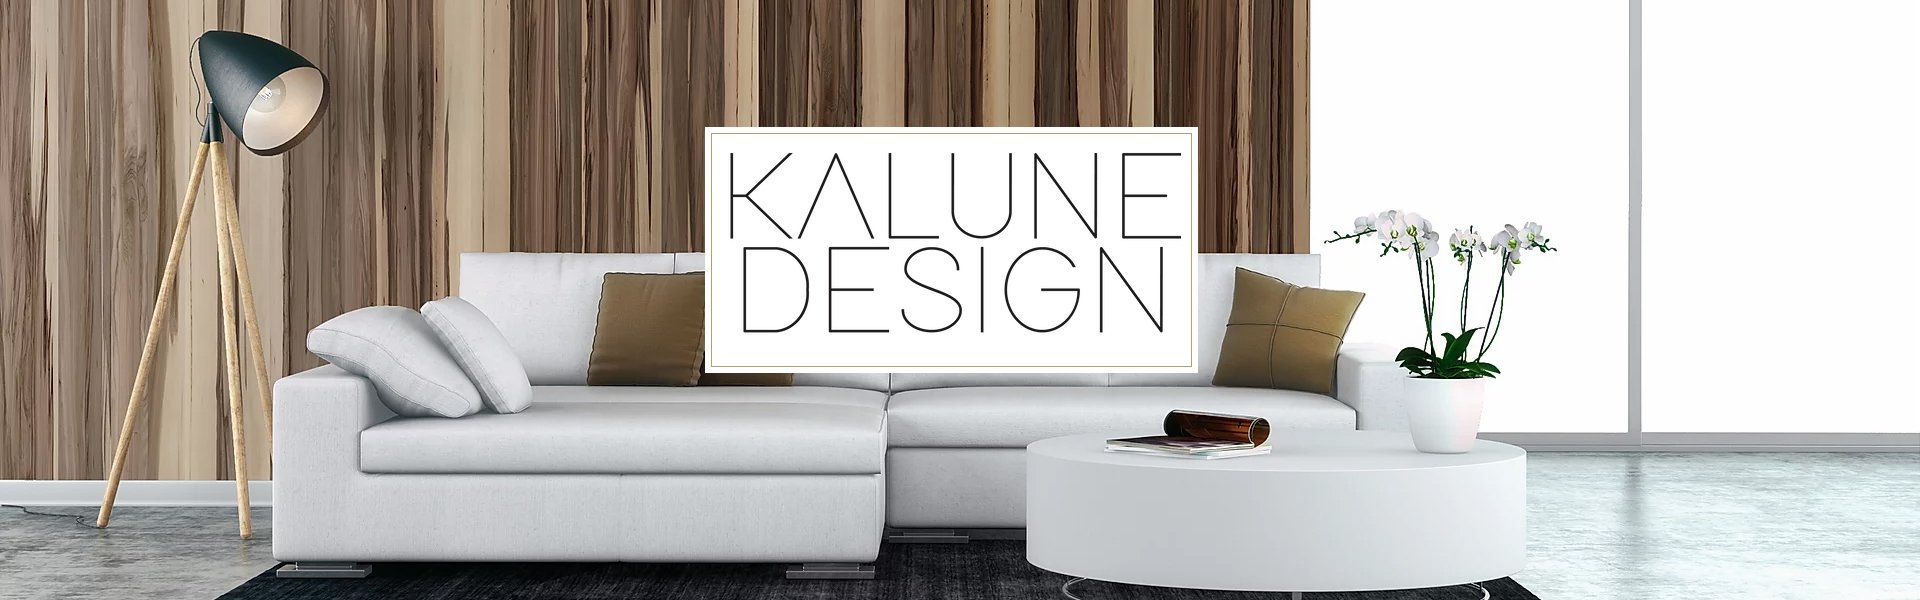 Riidenagi Kalune Design Pet 027, pruun Kalune Design